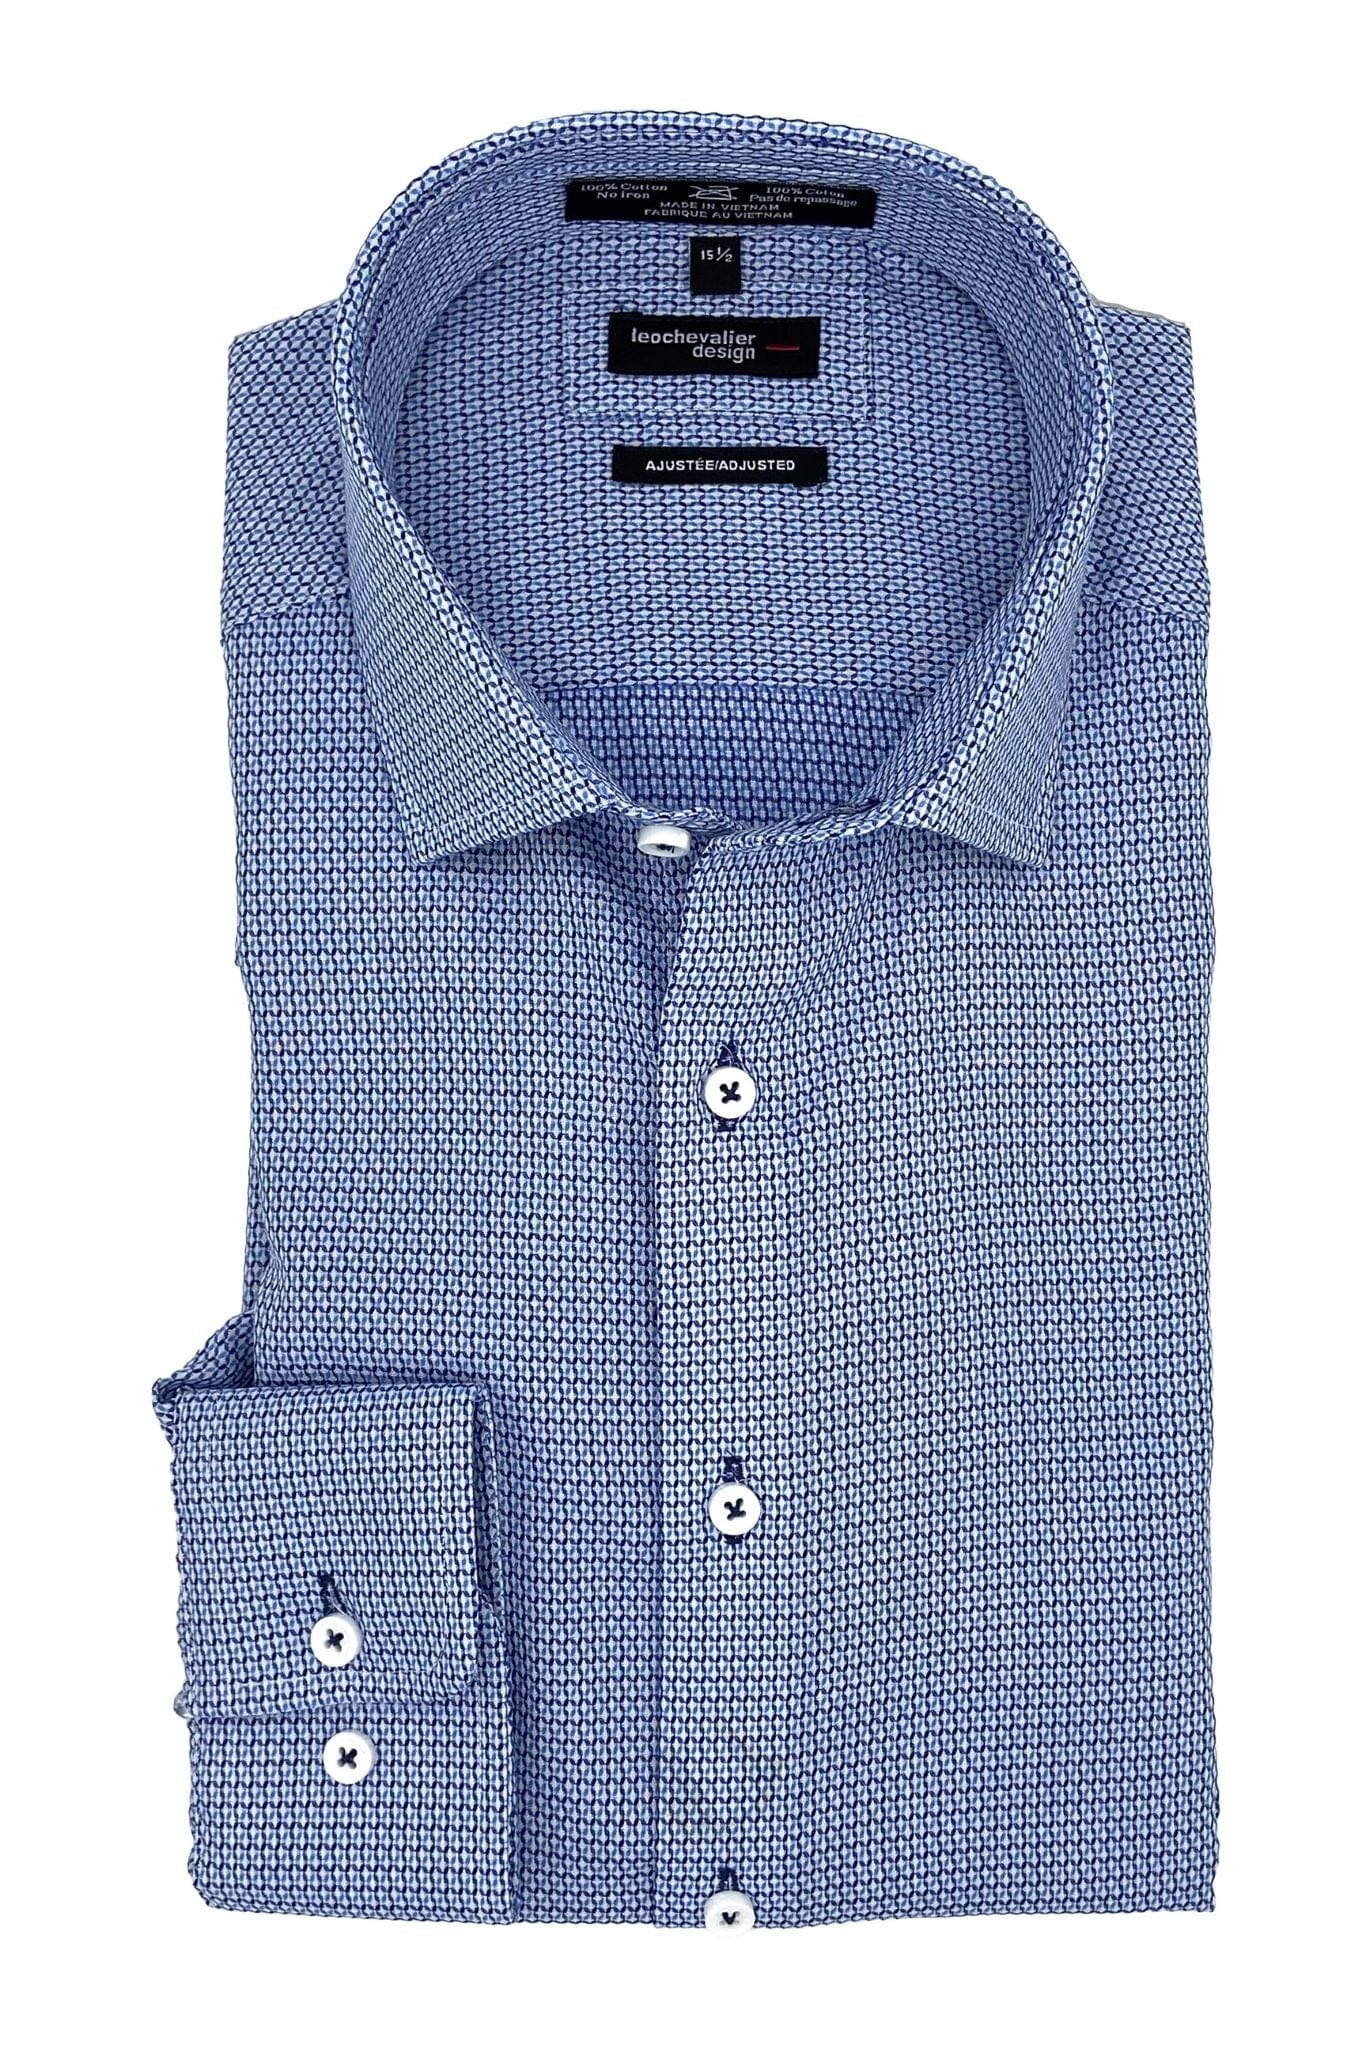 Leo Chevalier Design Sleek Slim Fit Non-Iron Blue Print Dress Shirts